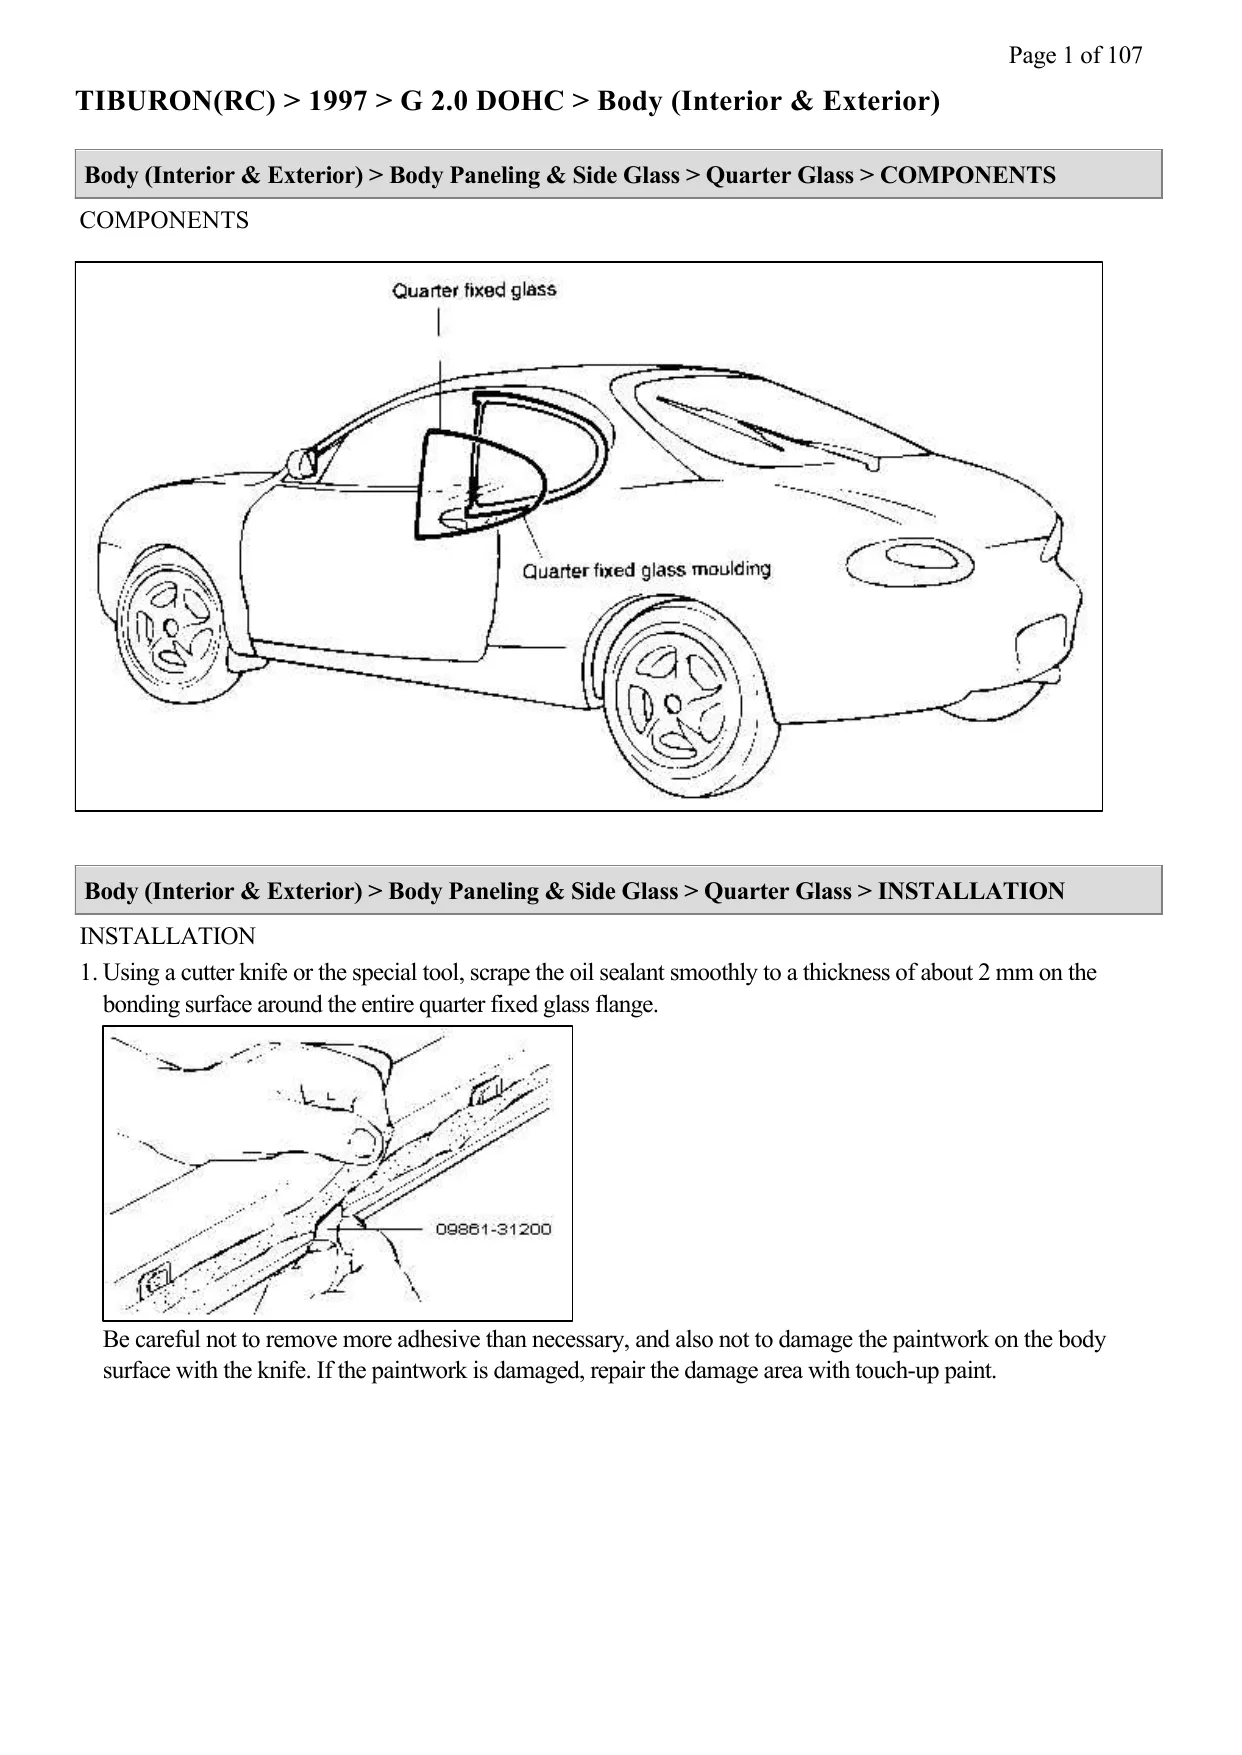 1997-2001 Hyundai Tiburon shop manual Preview image 1